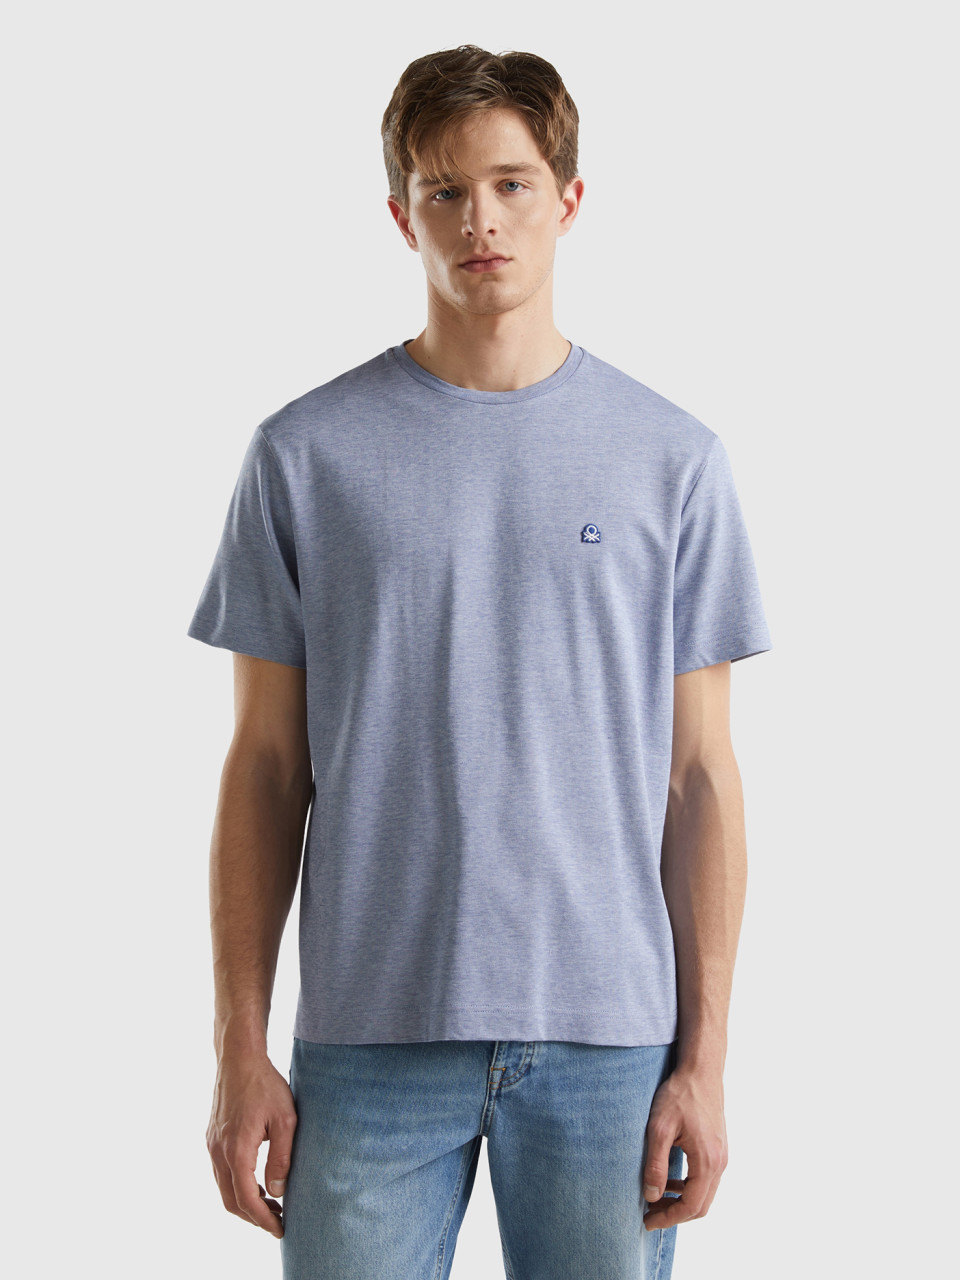 Benetton, Mikro-piqué-shirt, Taubenblau, male